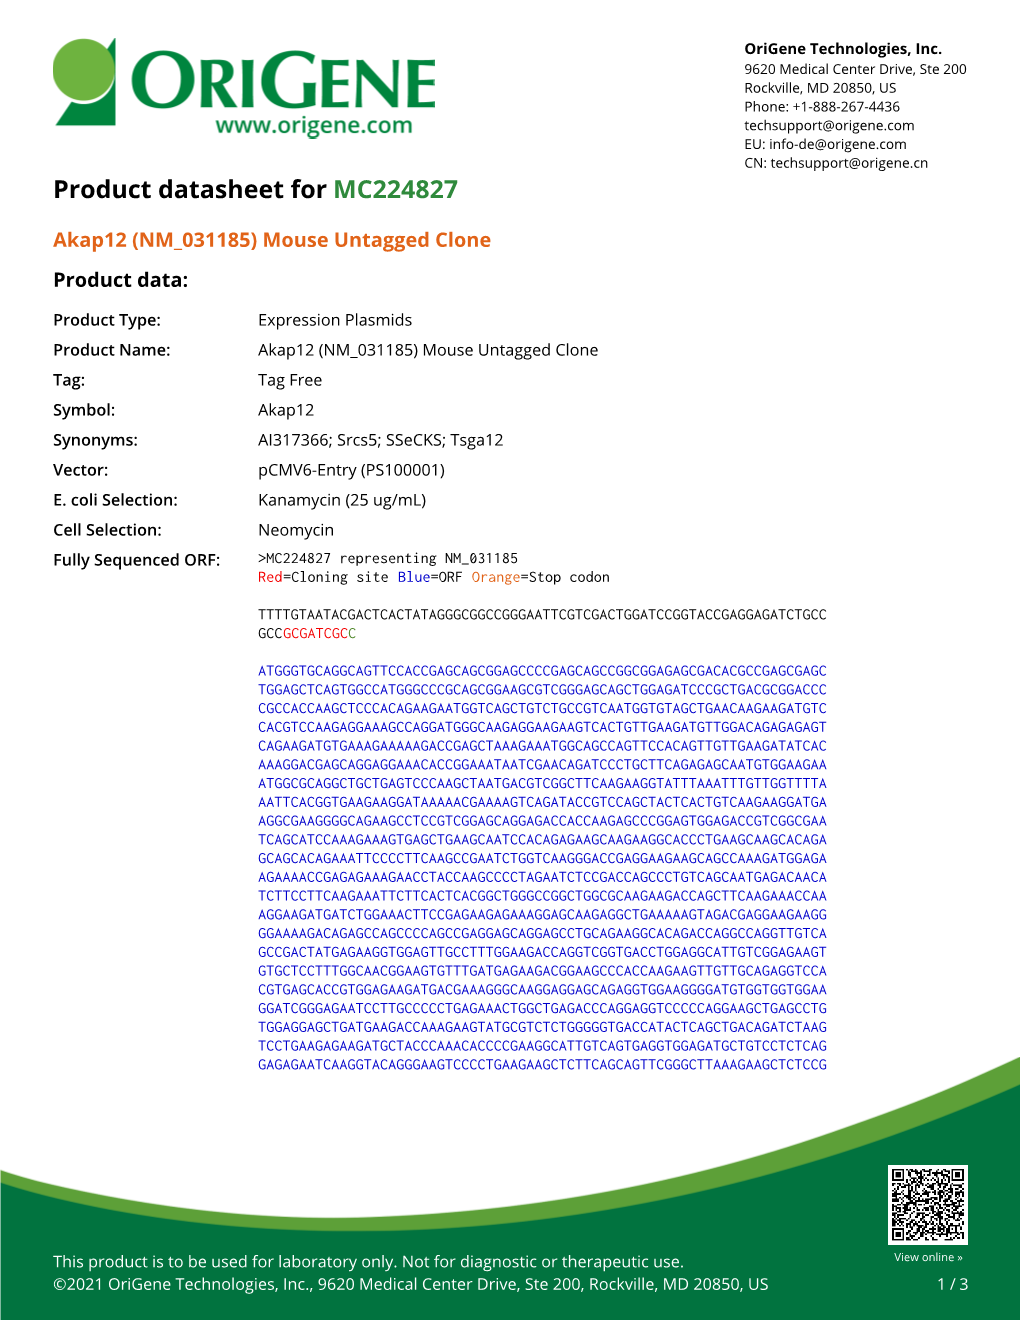 Akap12 (NM 031185) Mouse Untagged Clone – MC224827 | Origene